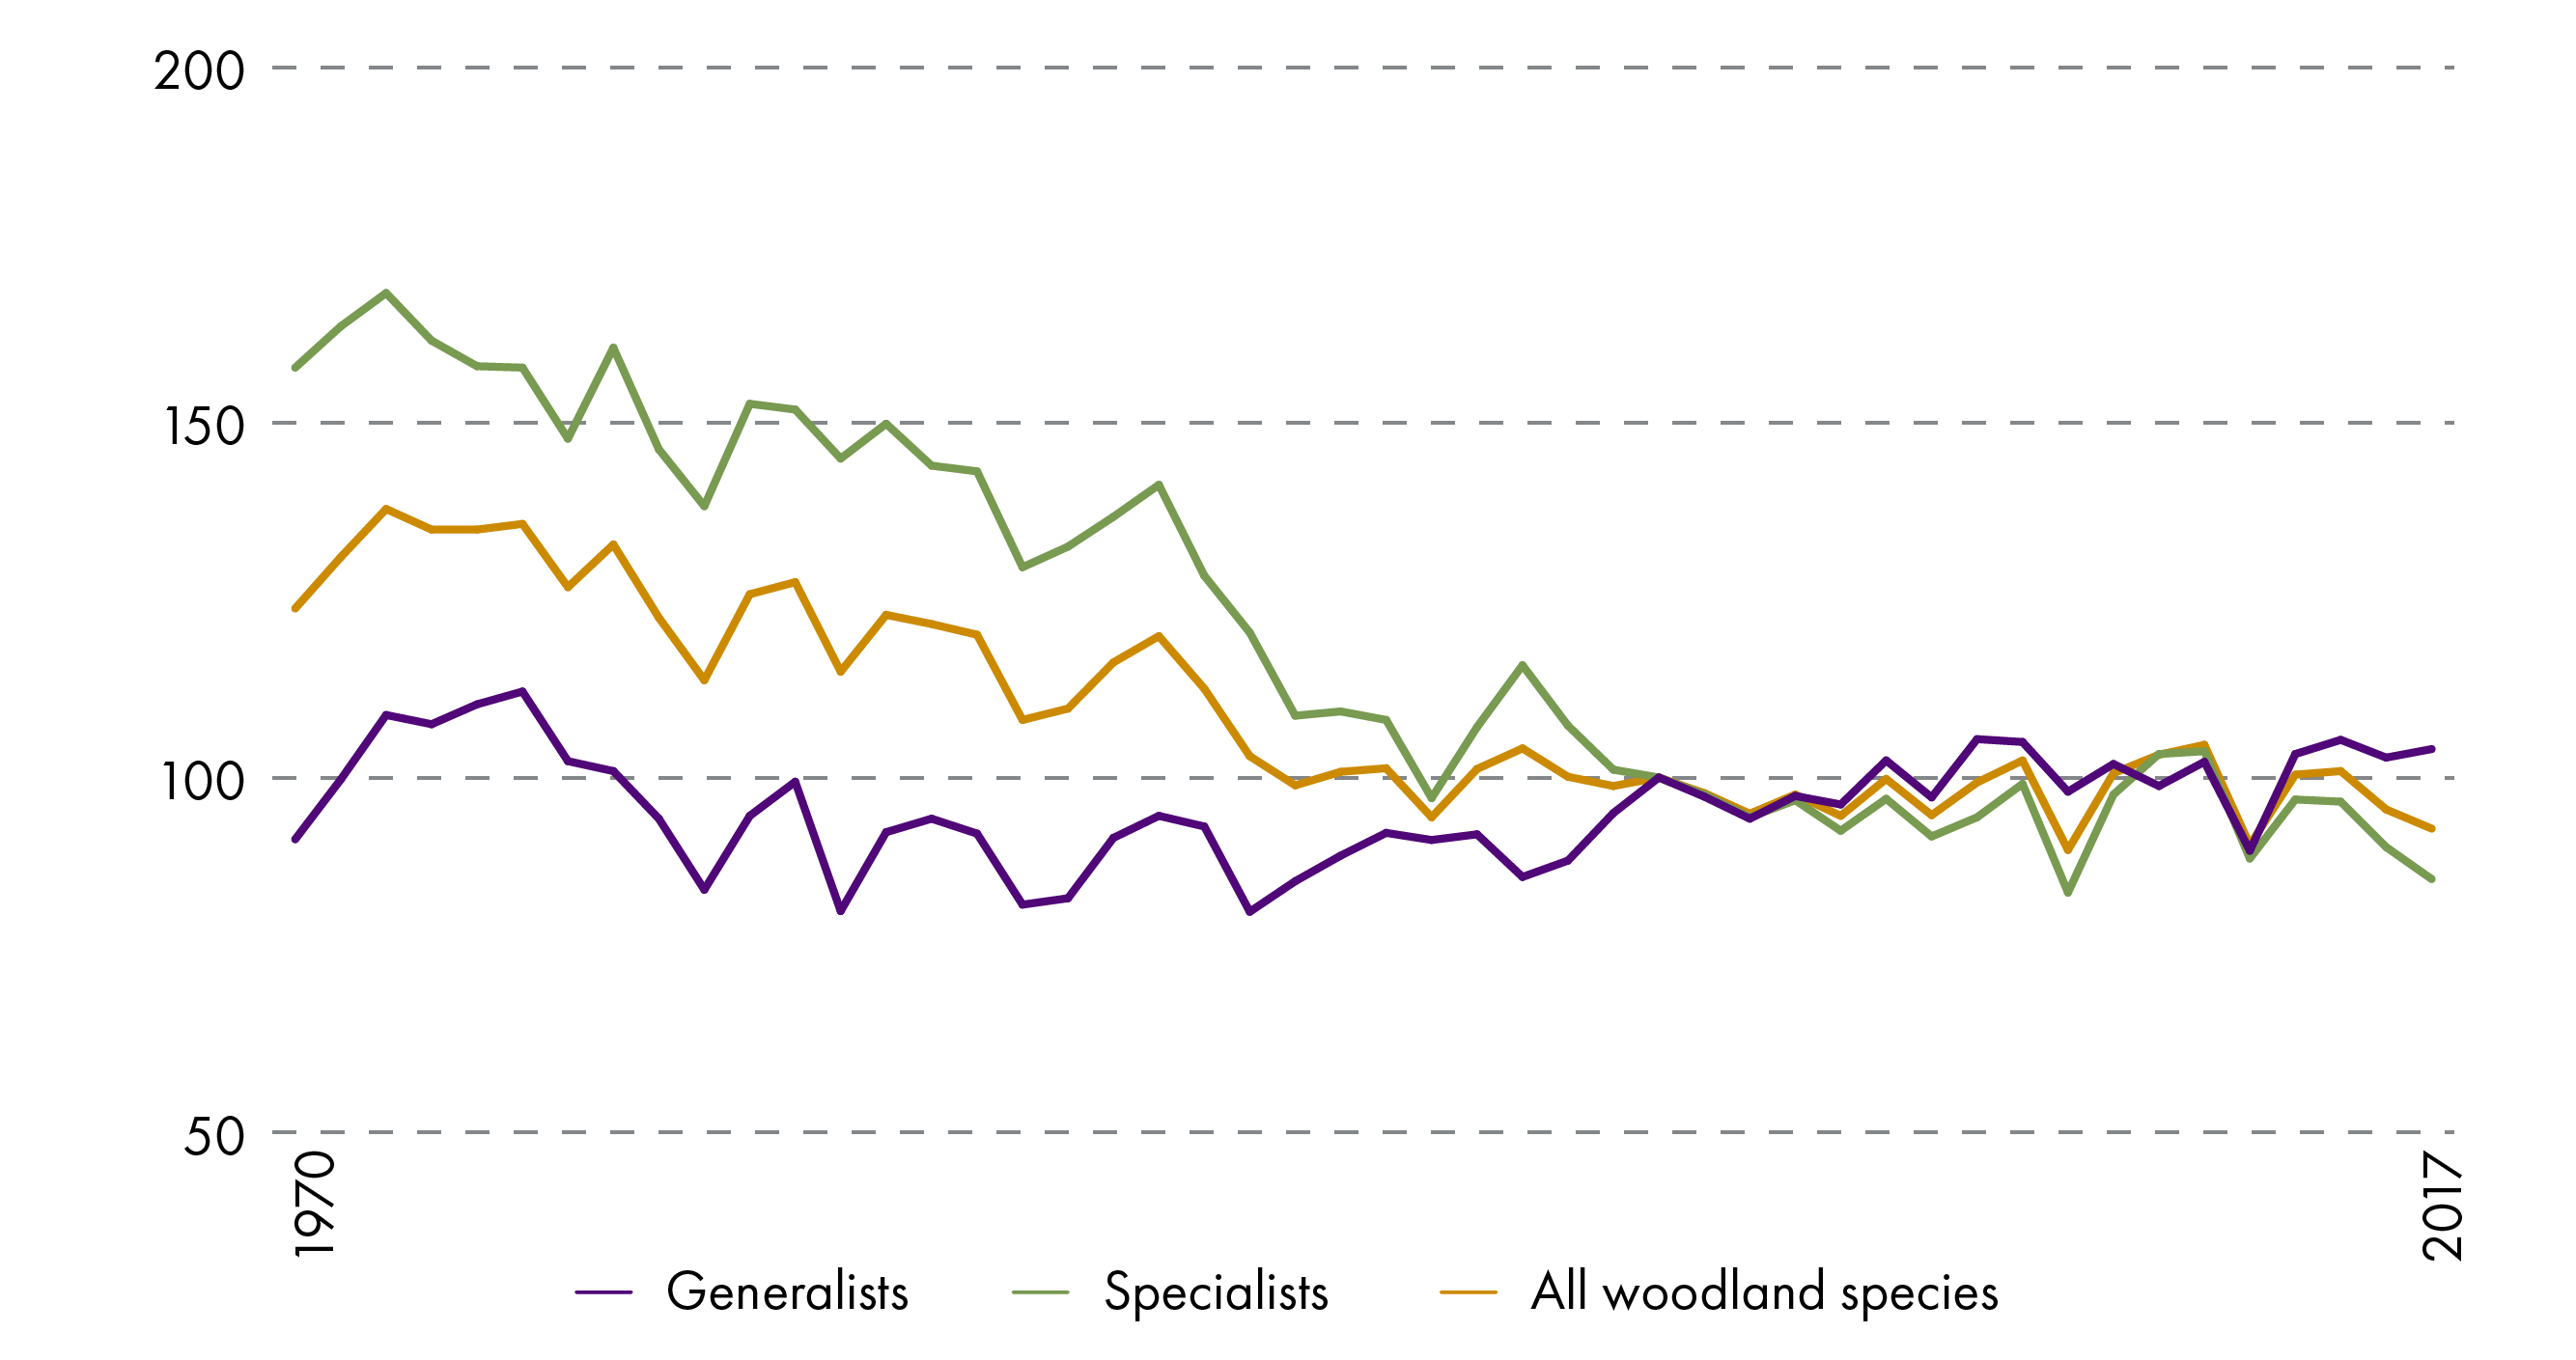 All woodland bird species have been decreasing since the 1970s